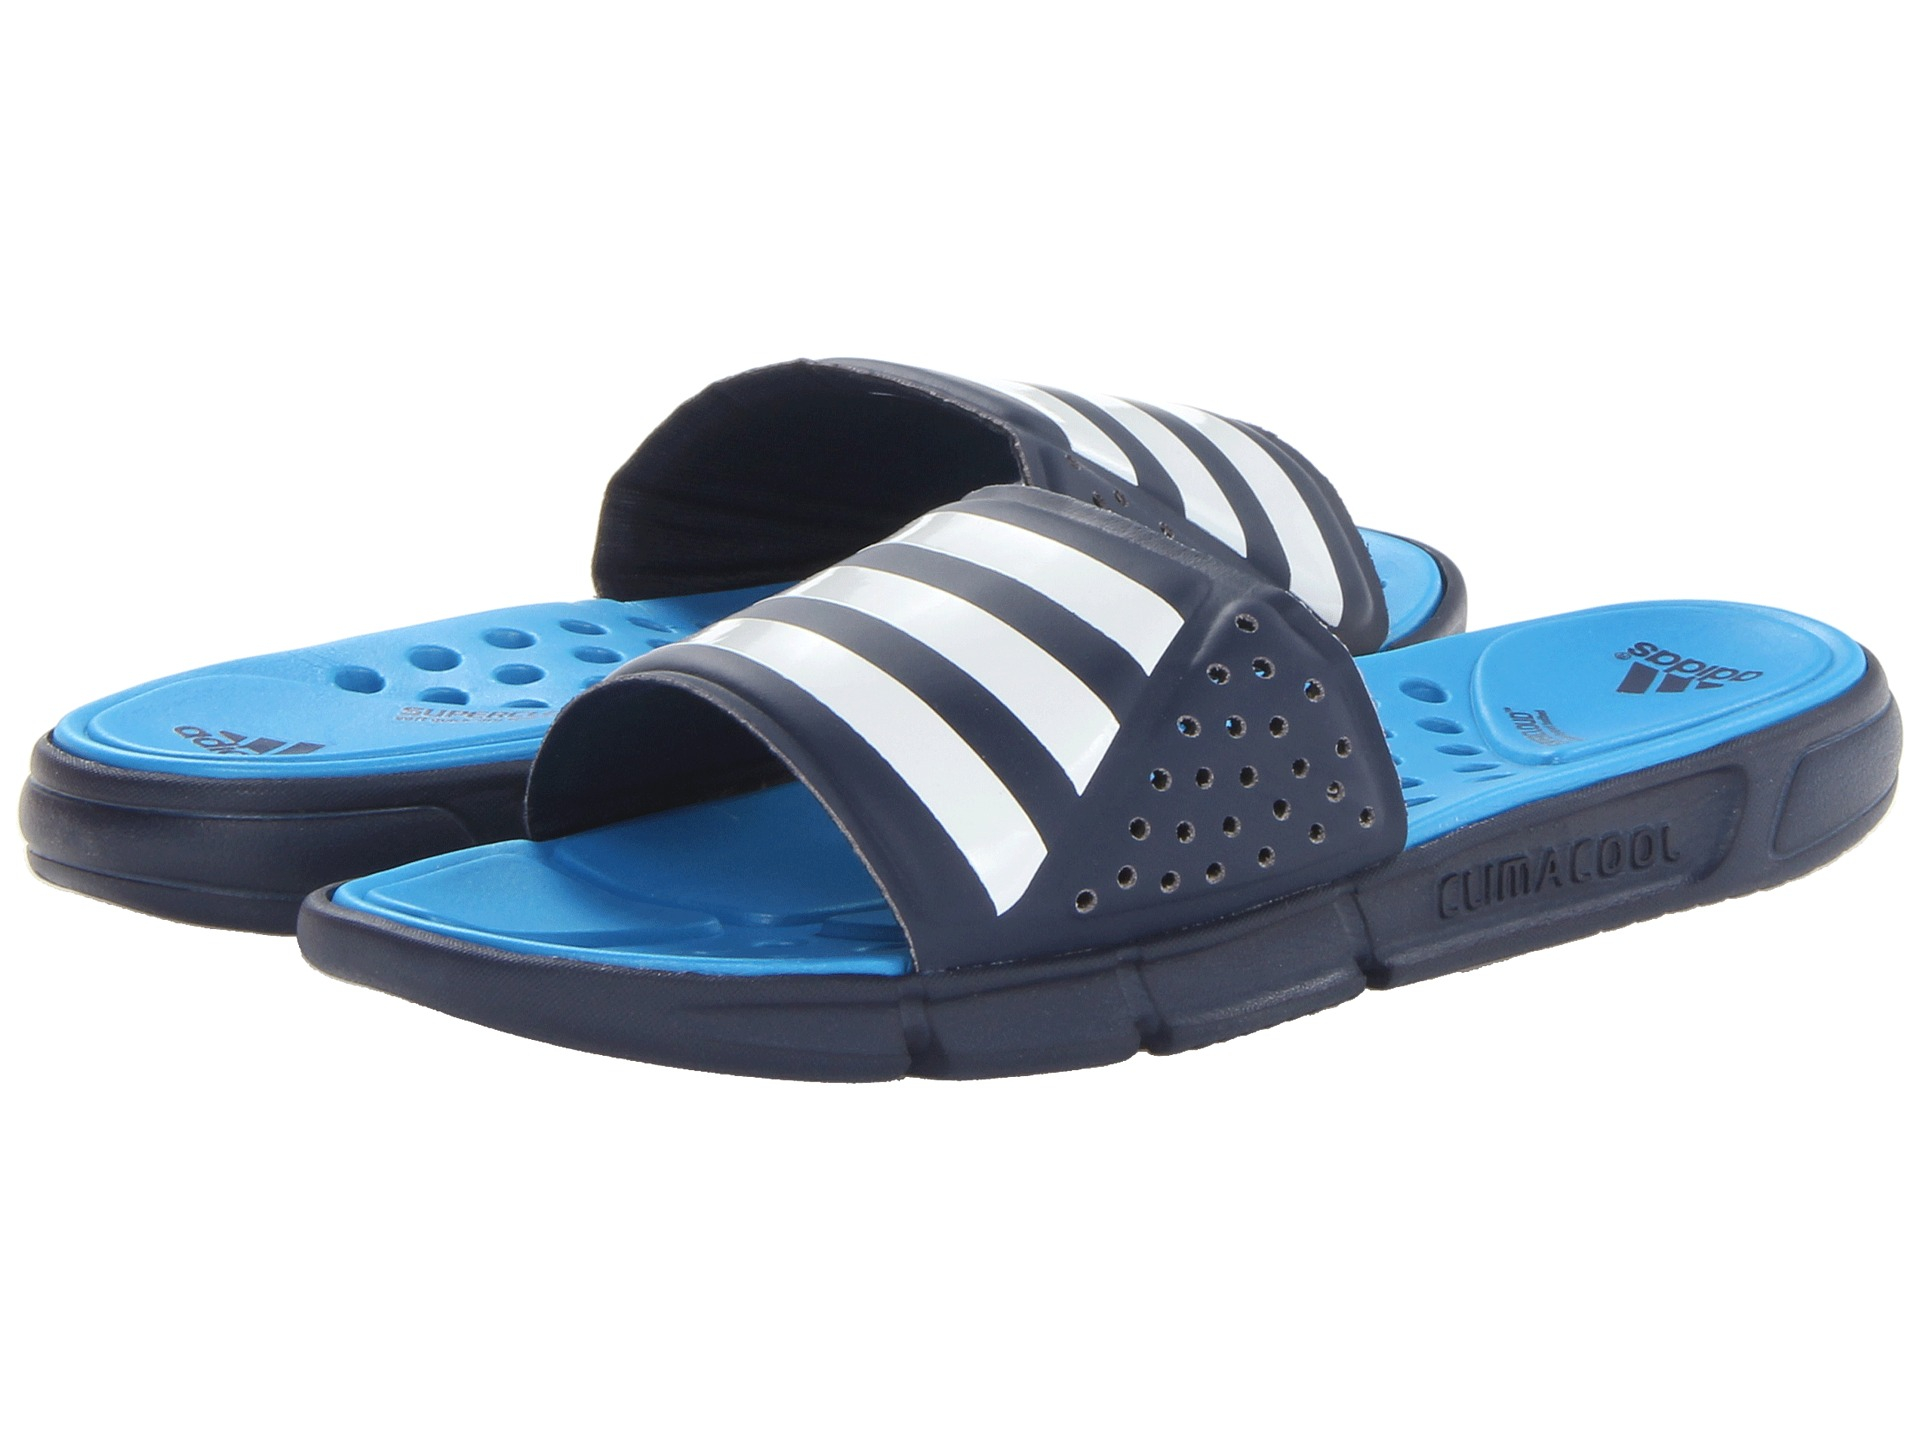 adidas Climacool Revo 3 Slide in Blue for Men